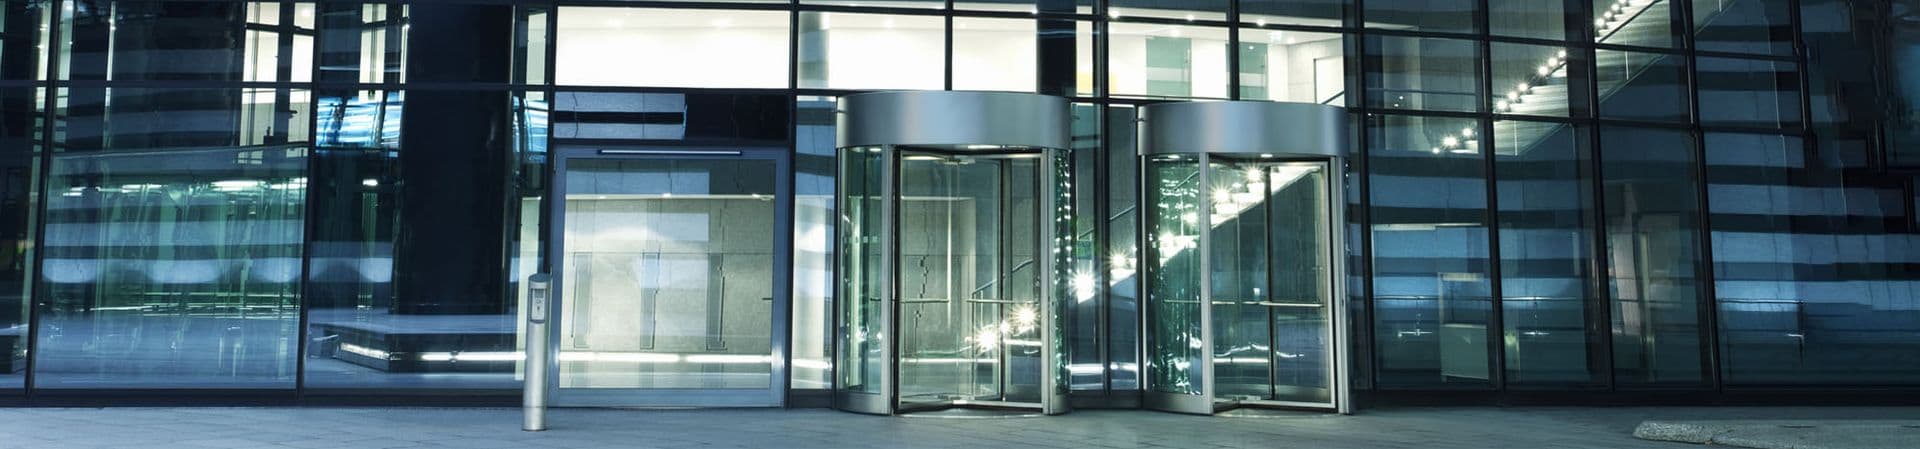 revolving doors in a glass building